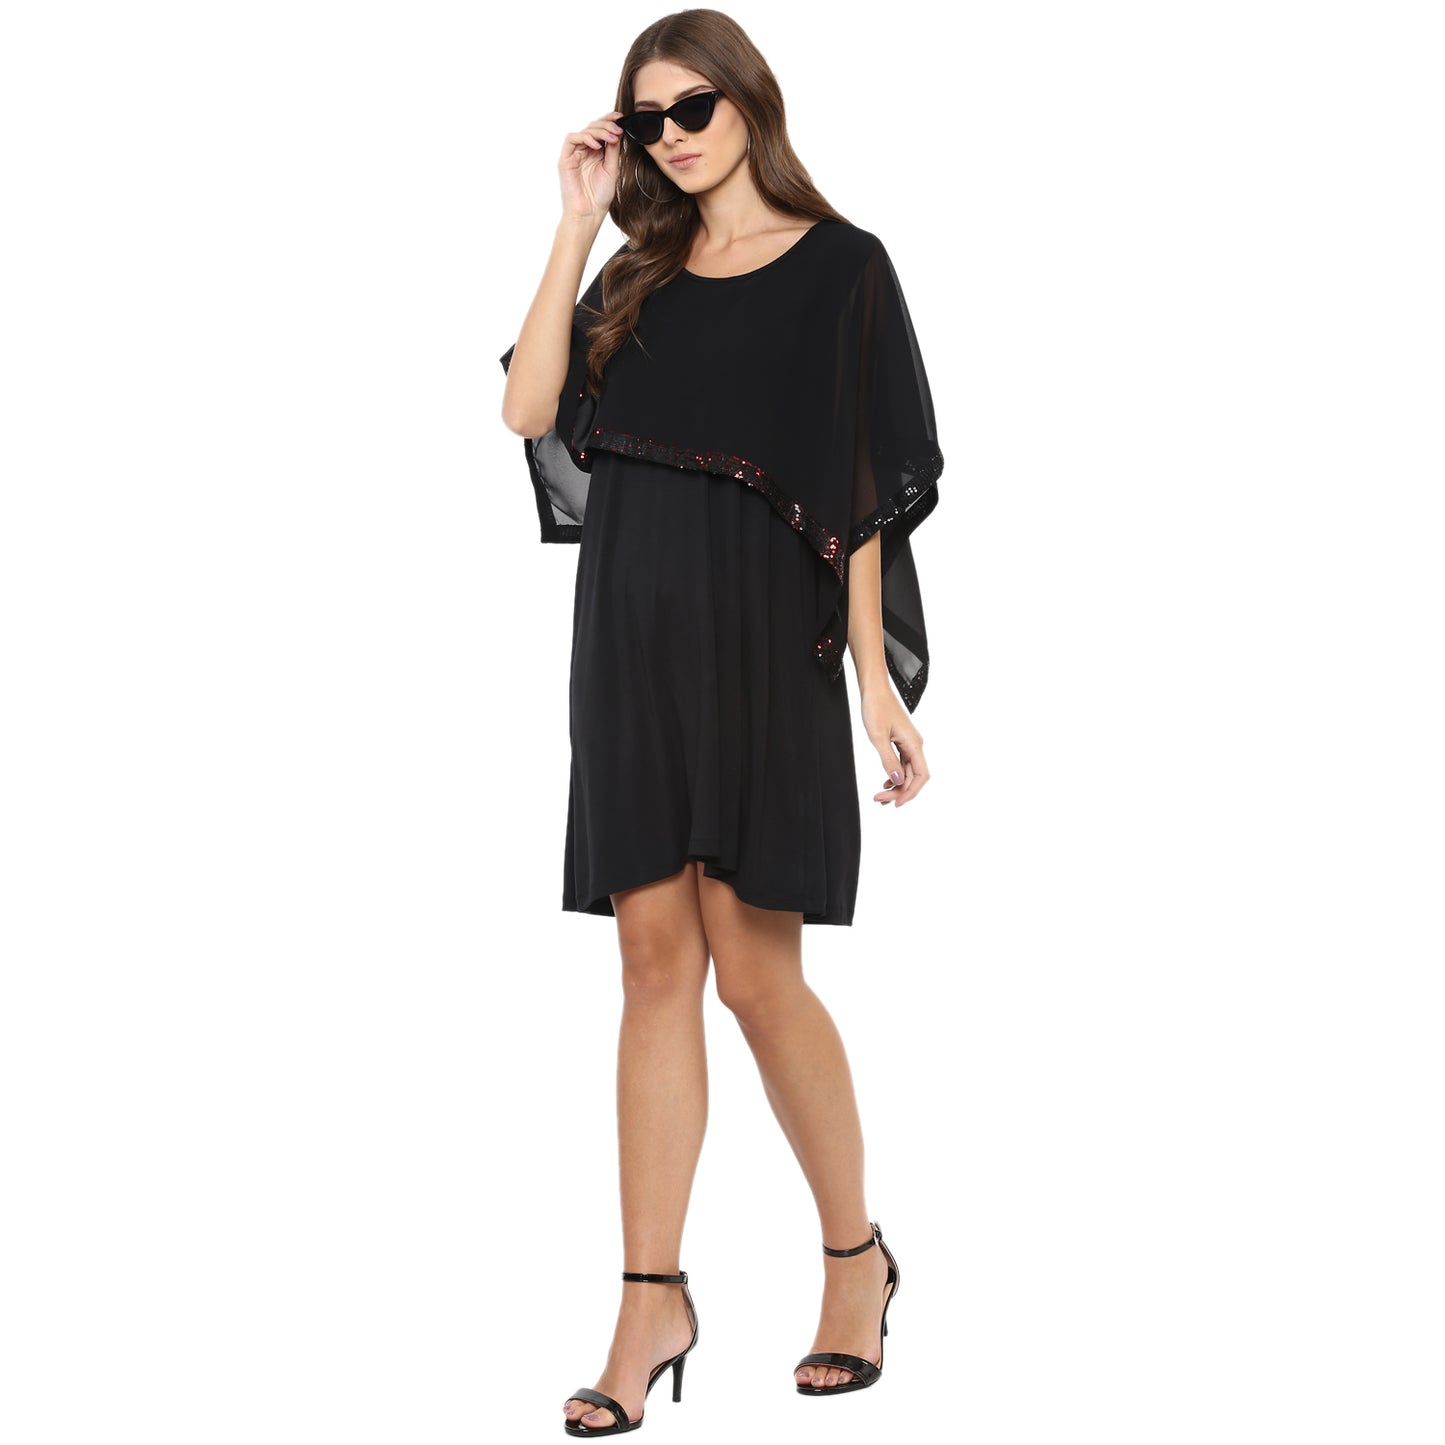 Solid Dark Black Regular Fit Round Neck Elbow Length Cape Sleeve Jersey Dress